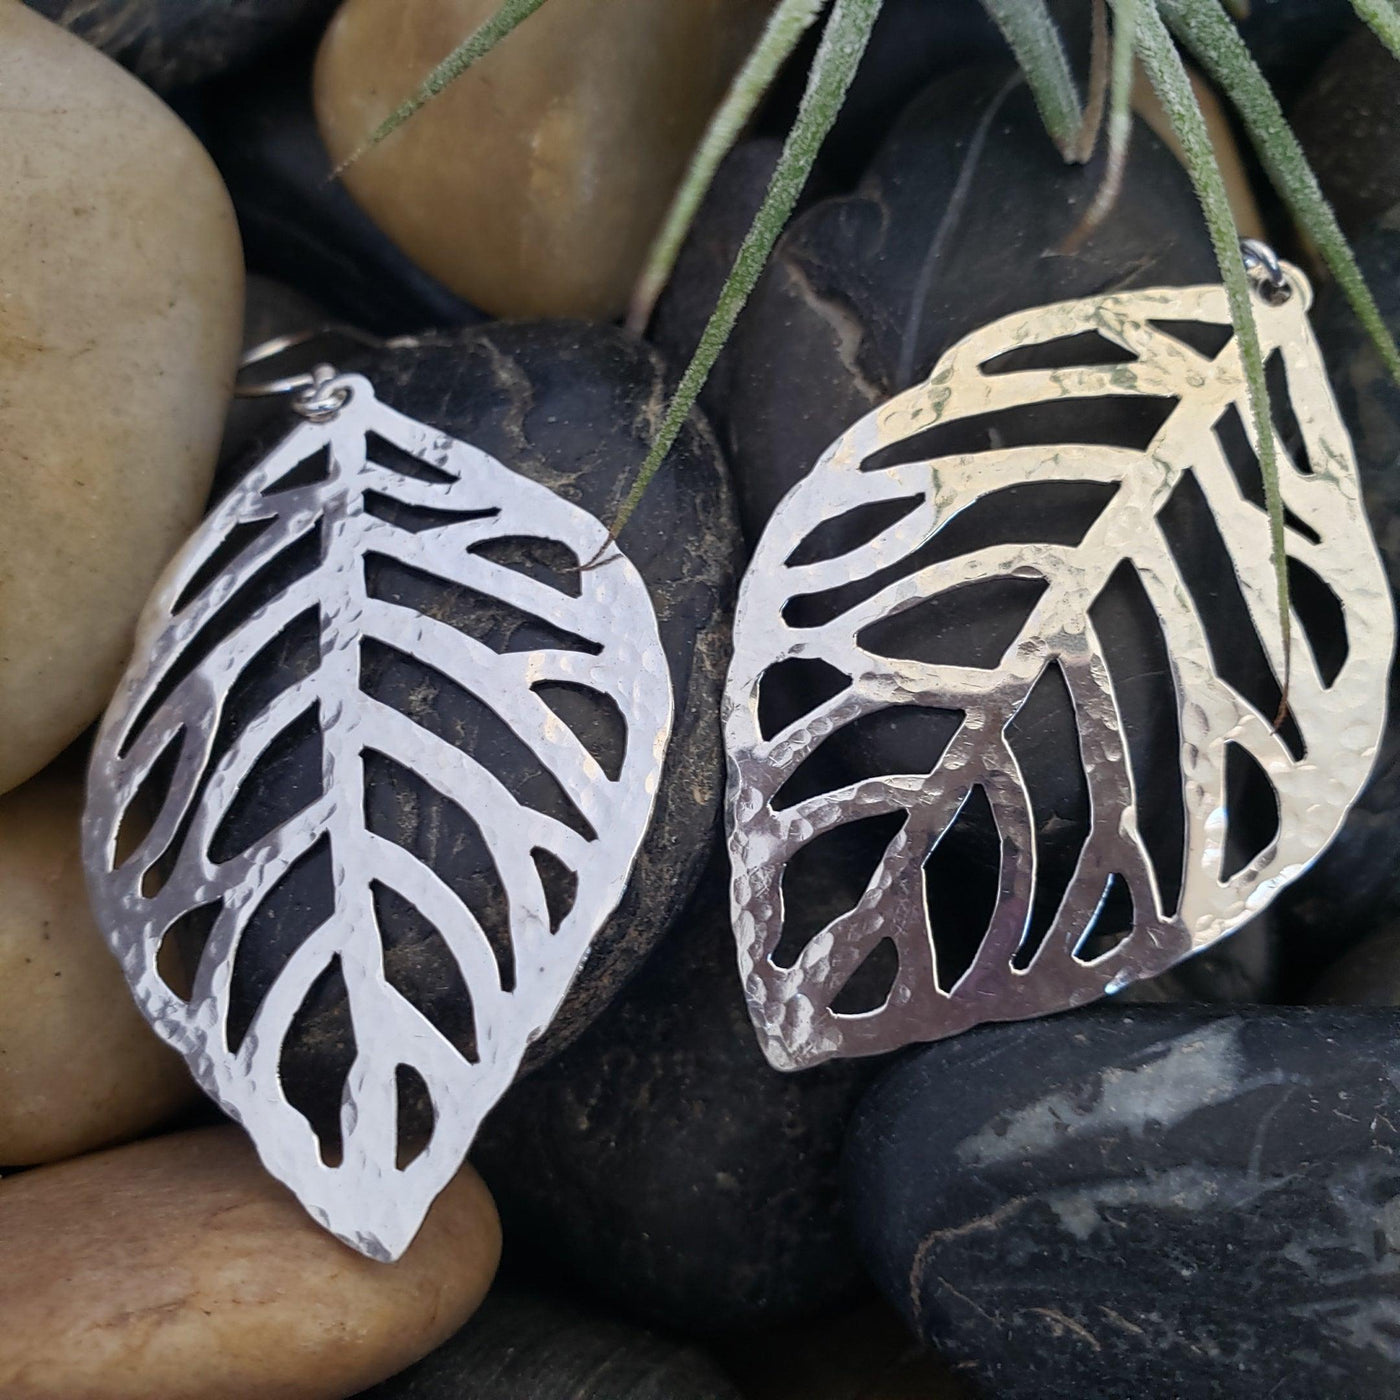 Silver hammered leaf earrings